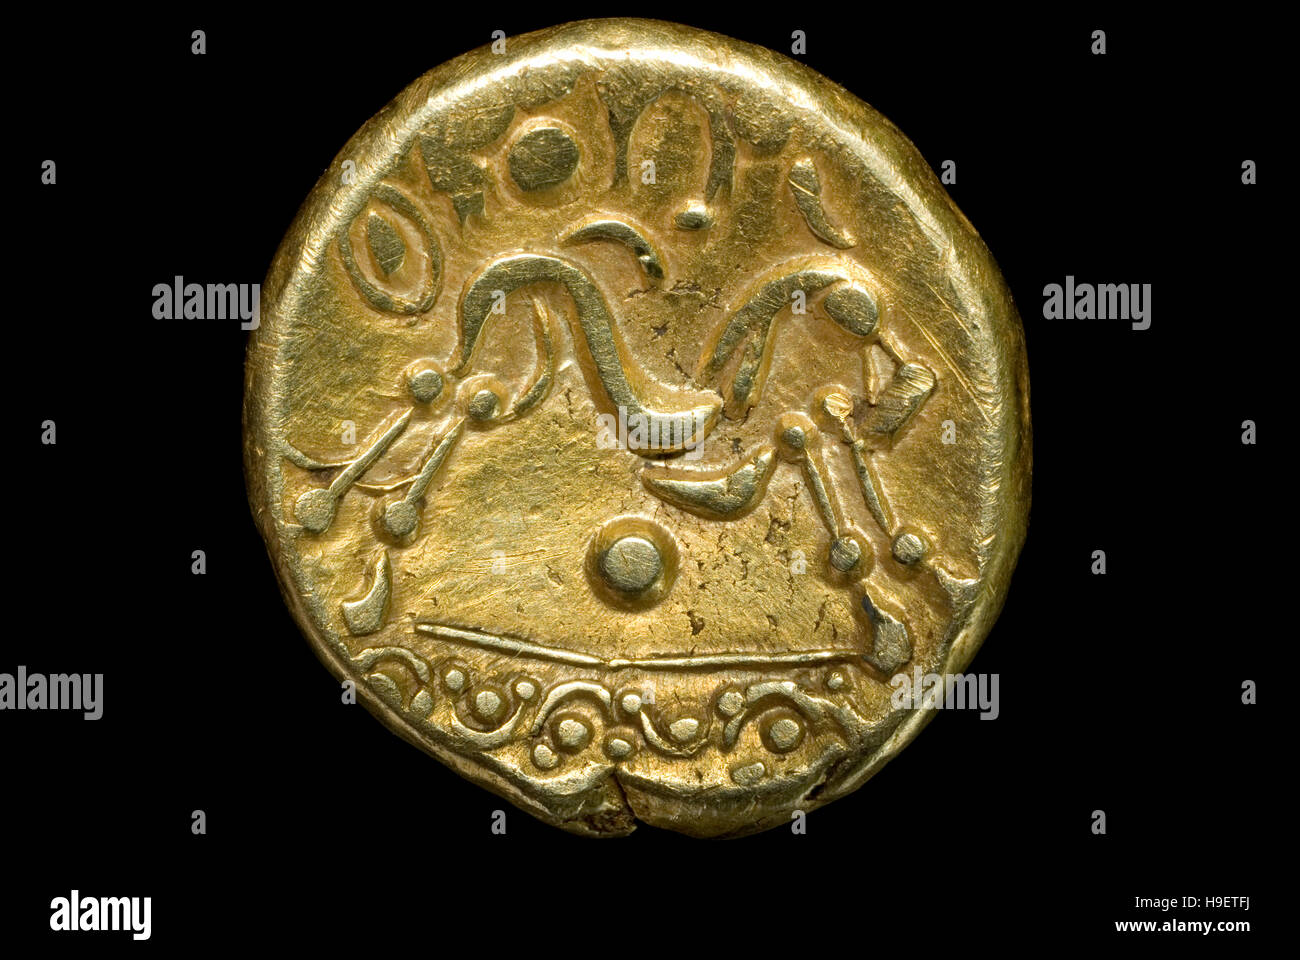 Iron age gold coin Stock Photo